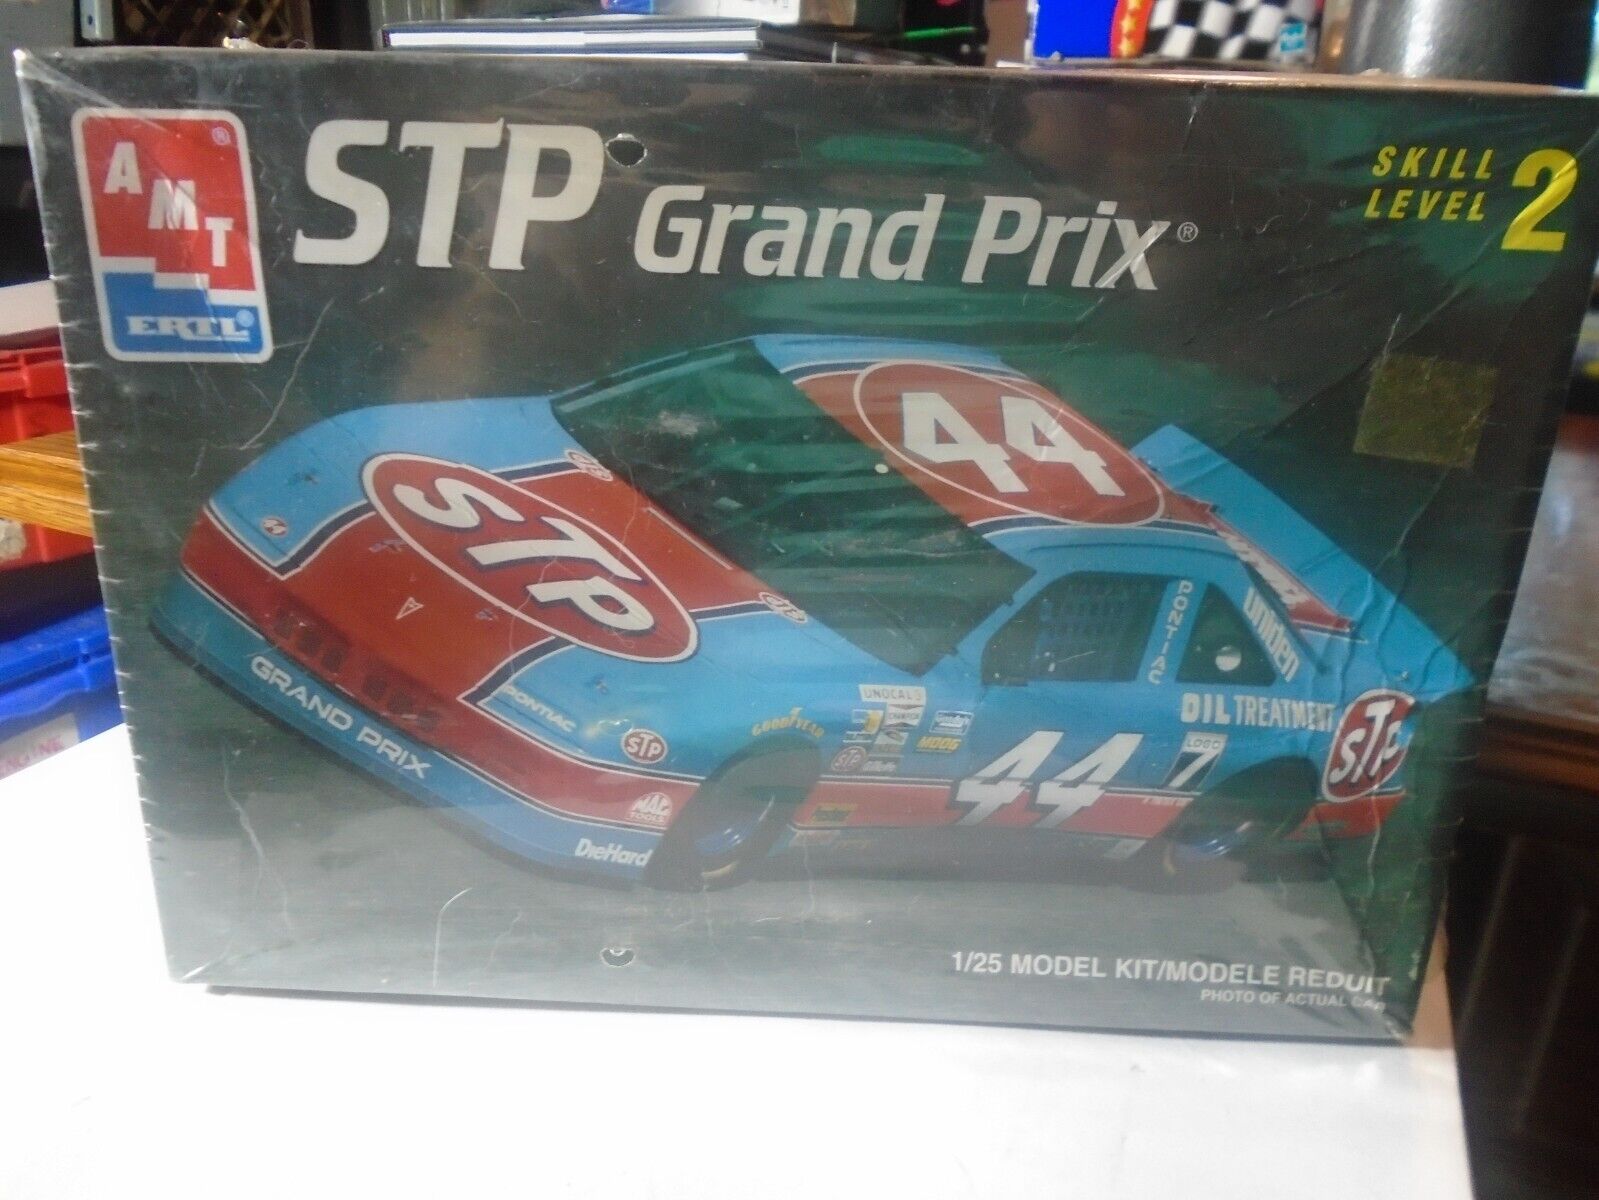 AMT Ertl #44 Stp Grand Prix Kit Modello, Abilità Livello 2, 1/25 Scala , 1993